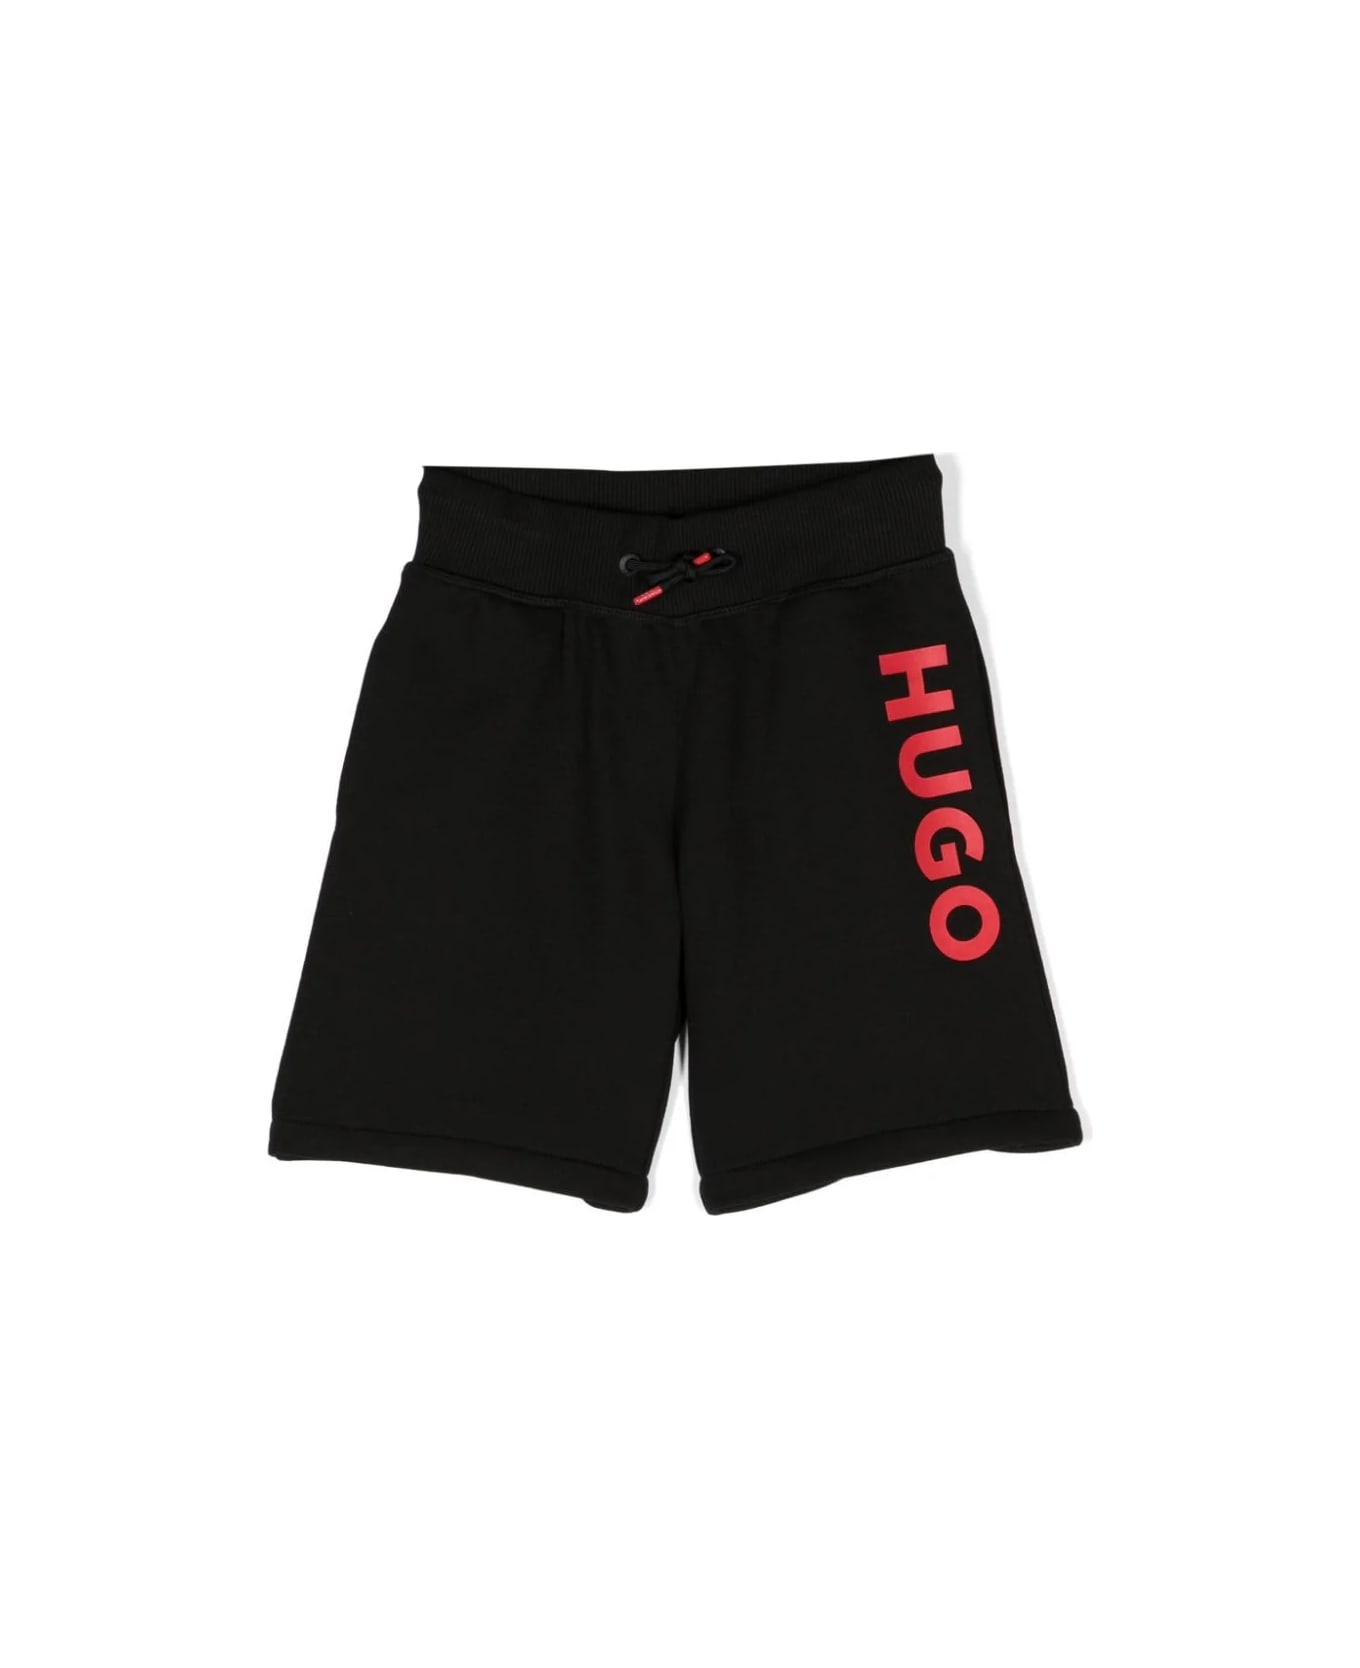 Hugo Boss Sports Shorts With Drawstring - Black